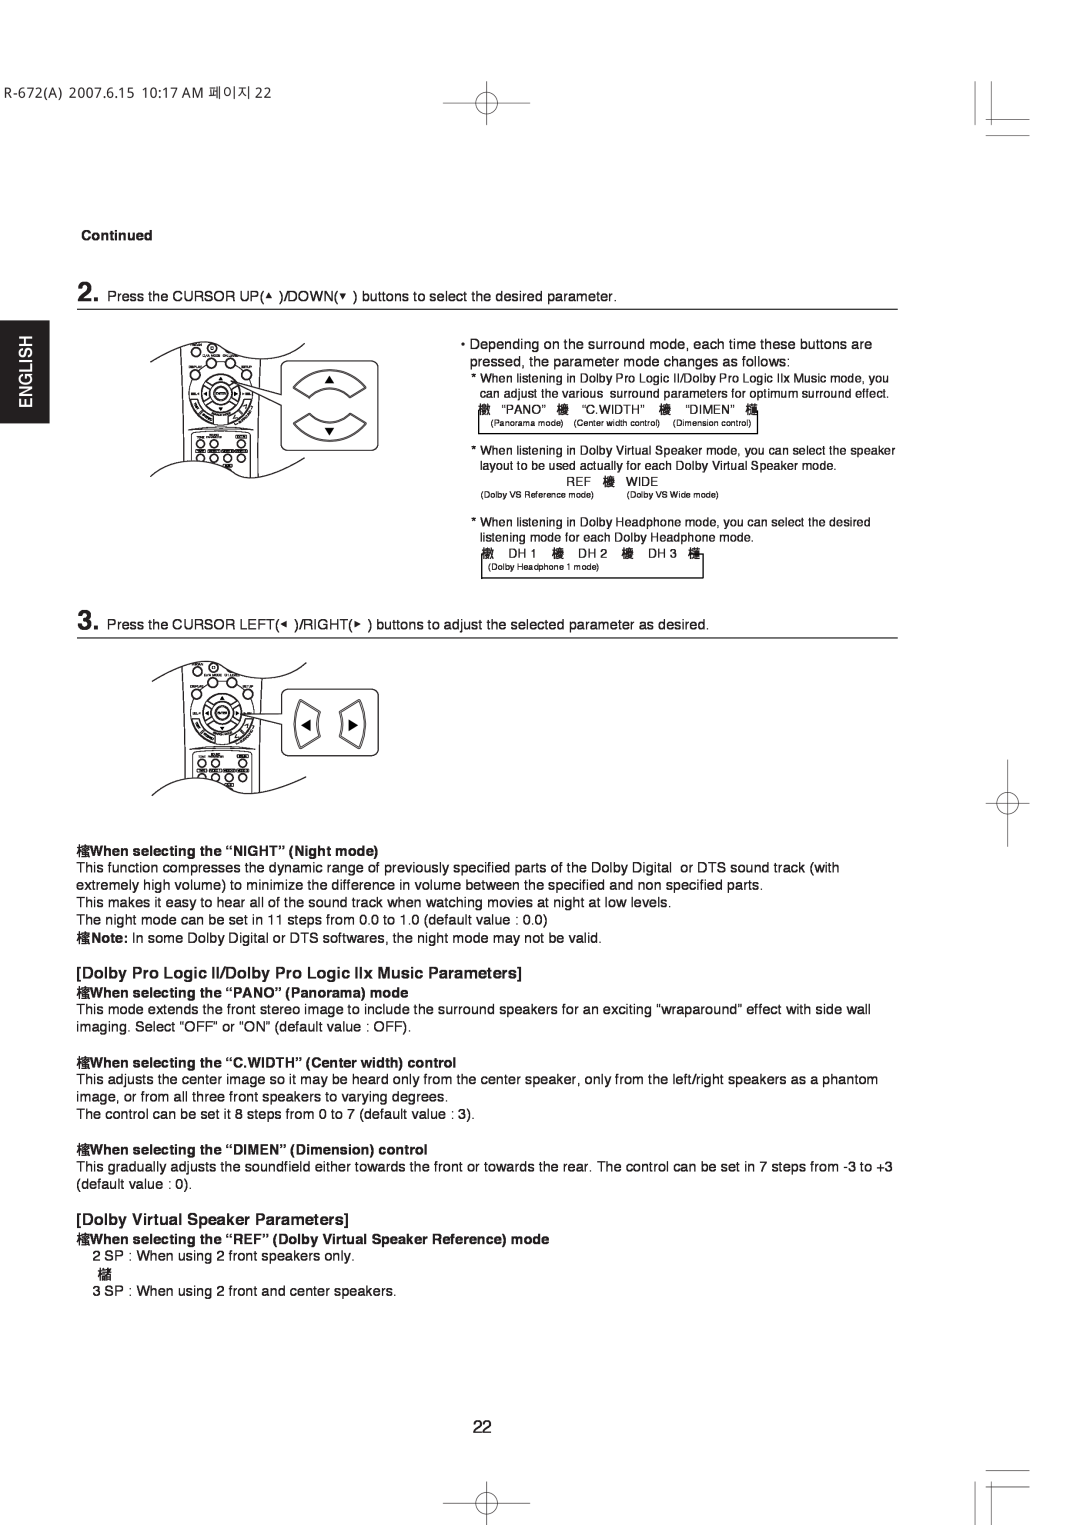 XM Satellite Radio manual Dolby Virtual Speaker Parameters, English, R-672A2007.6.15 10 17 AM 페이지, Continued 